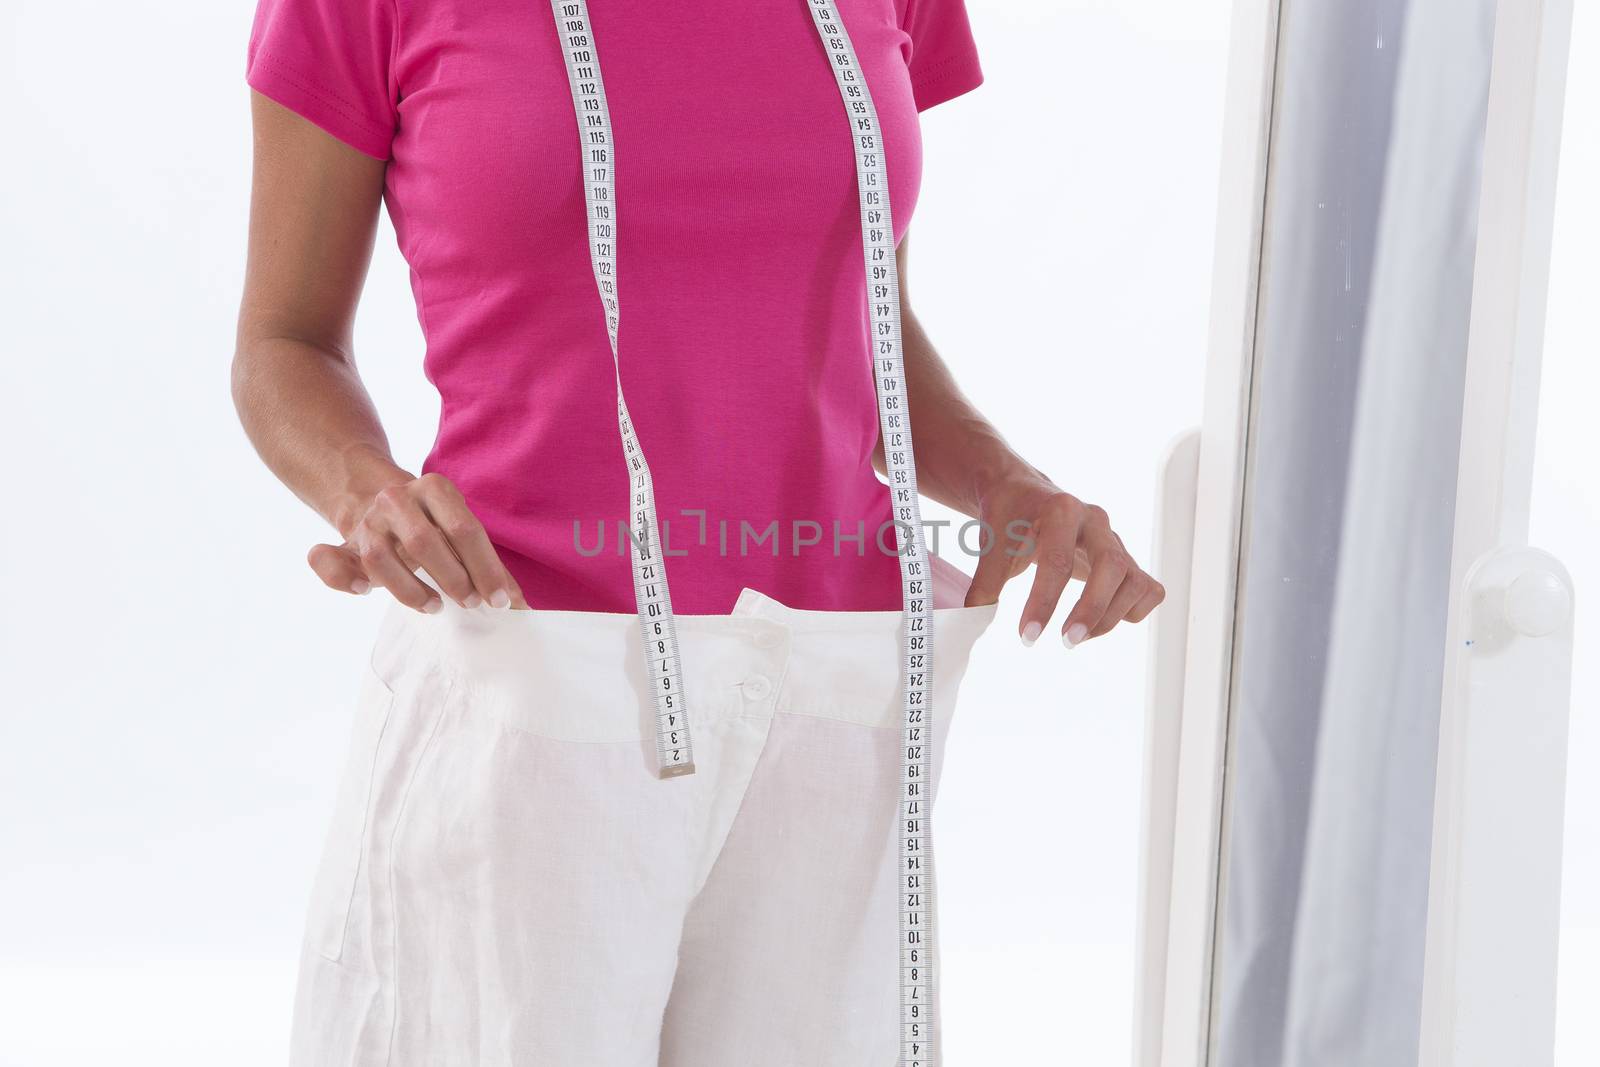 Big pants weight loss woman by JPC-PROD